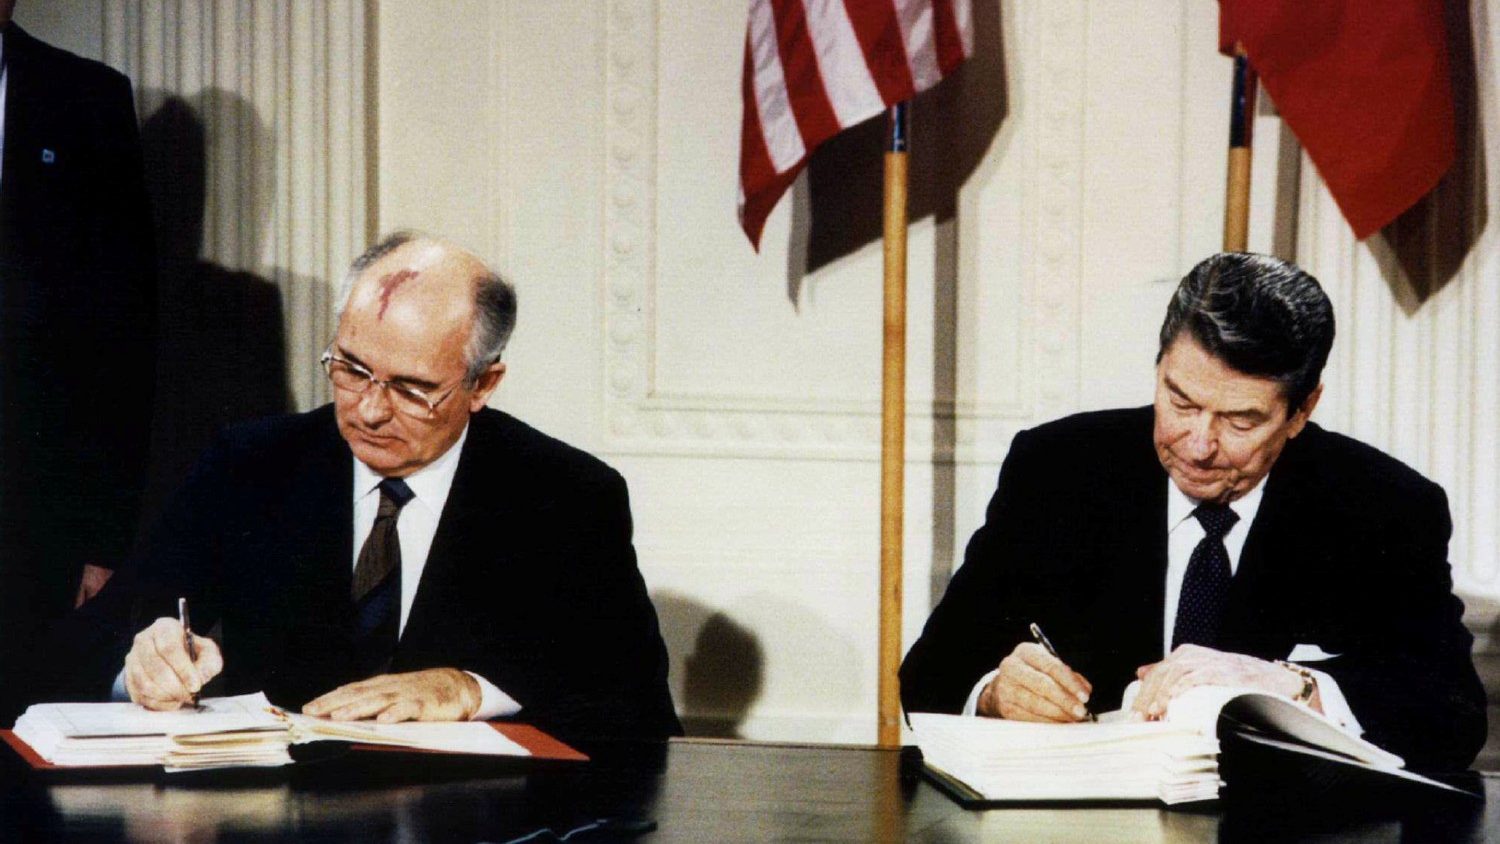 Mikhail Gorbachev on Nuclear Weapons, Family, Leadership